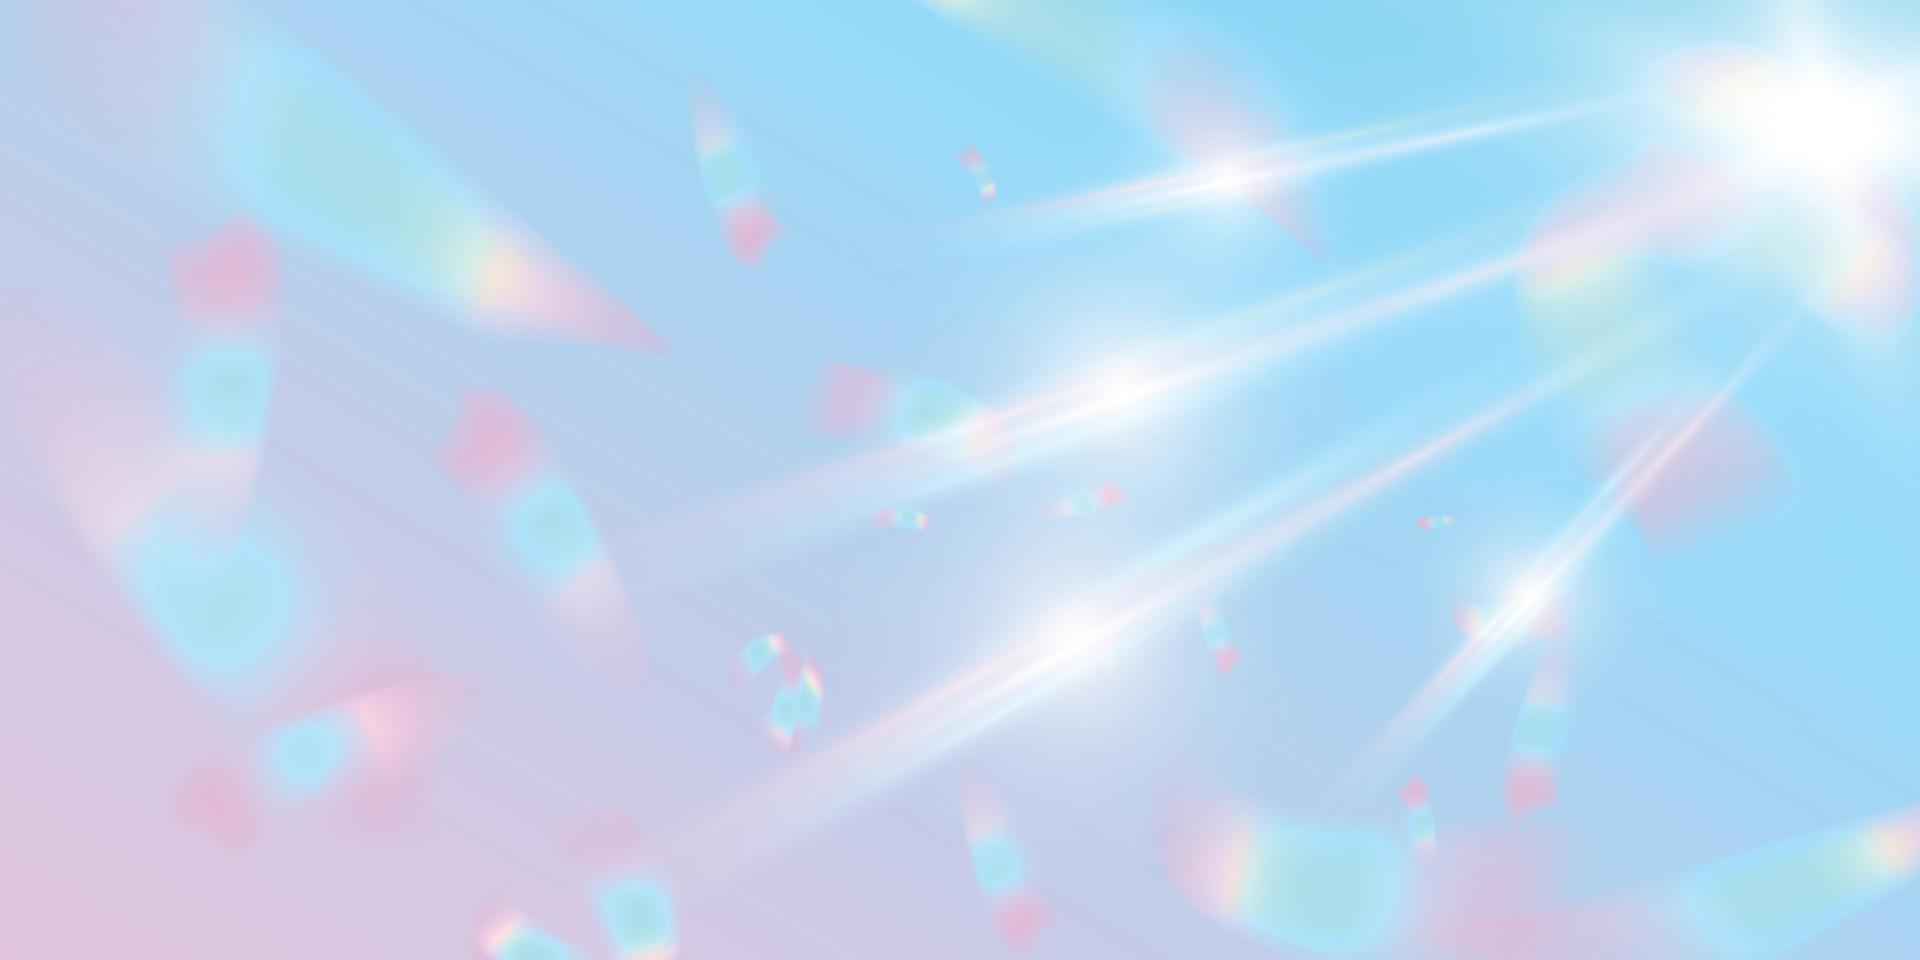 Confetti, birthday glitter with flare effect vector